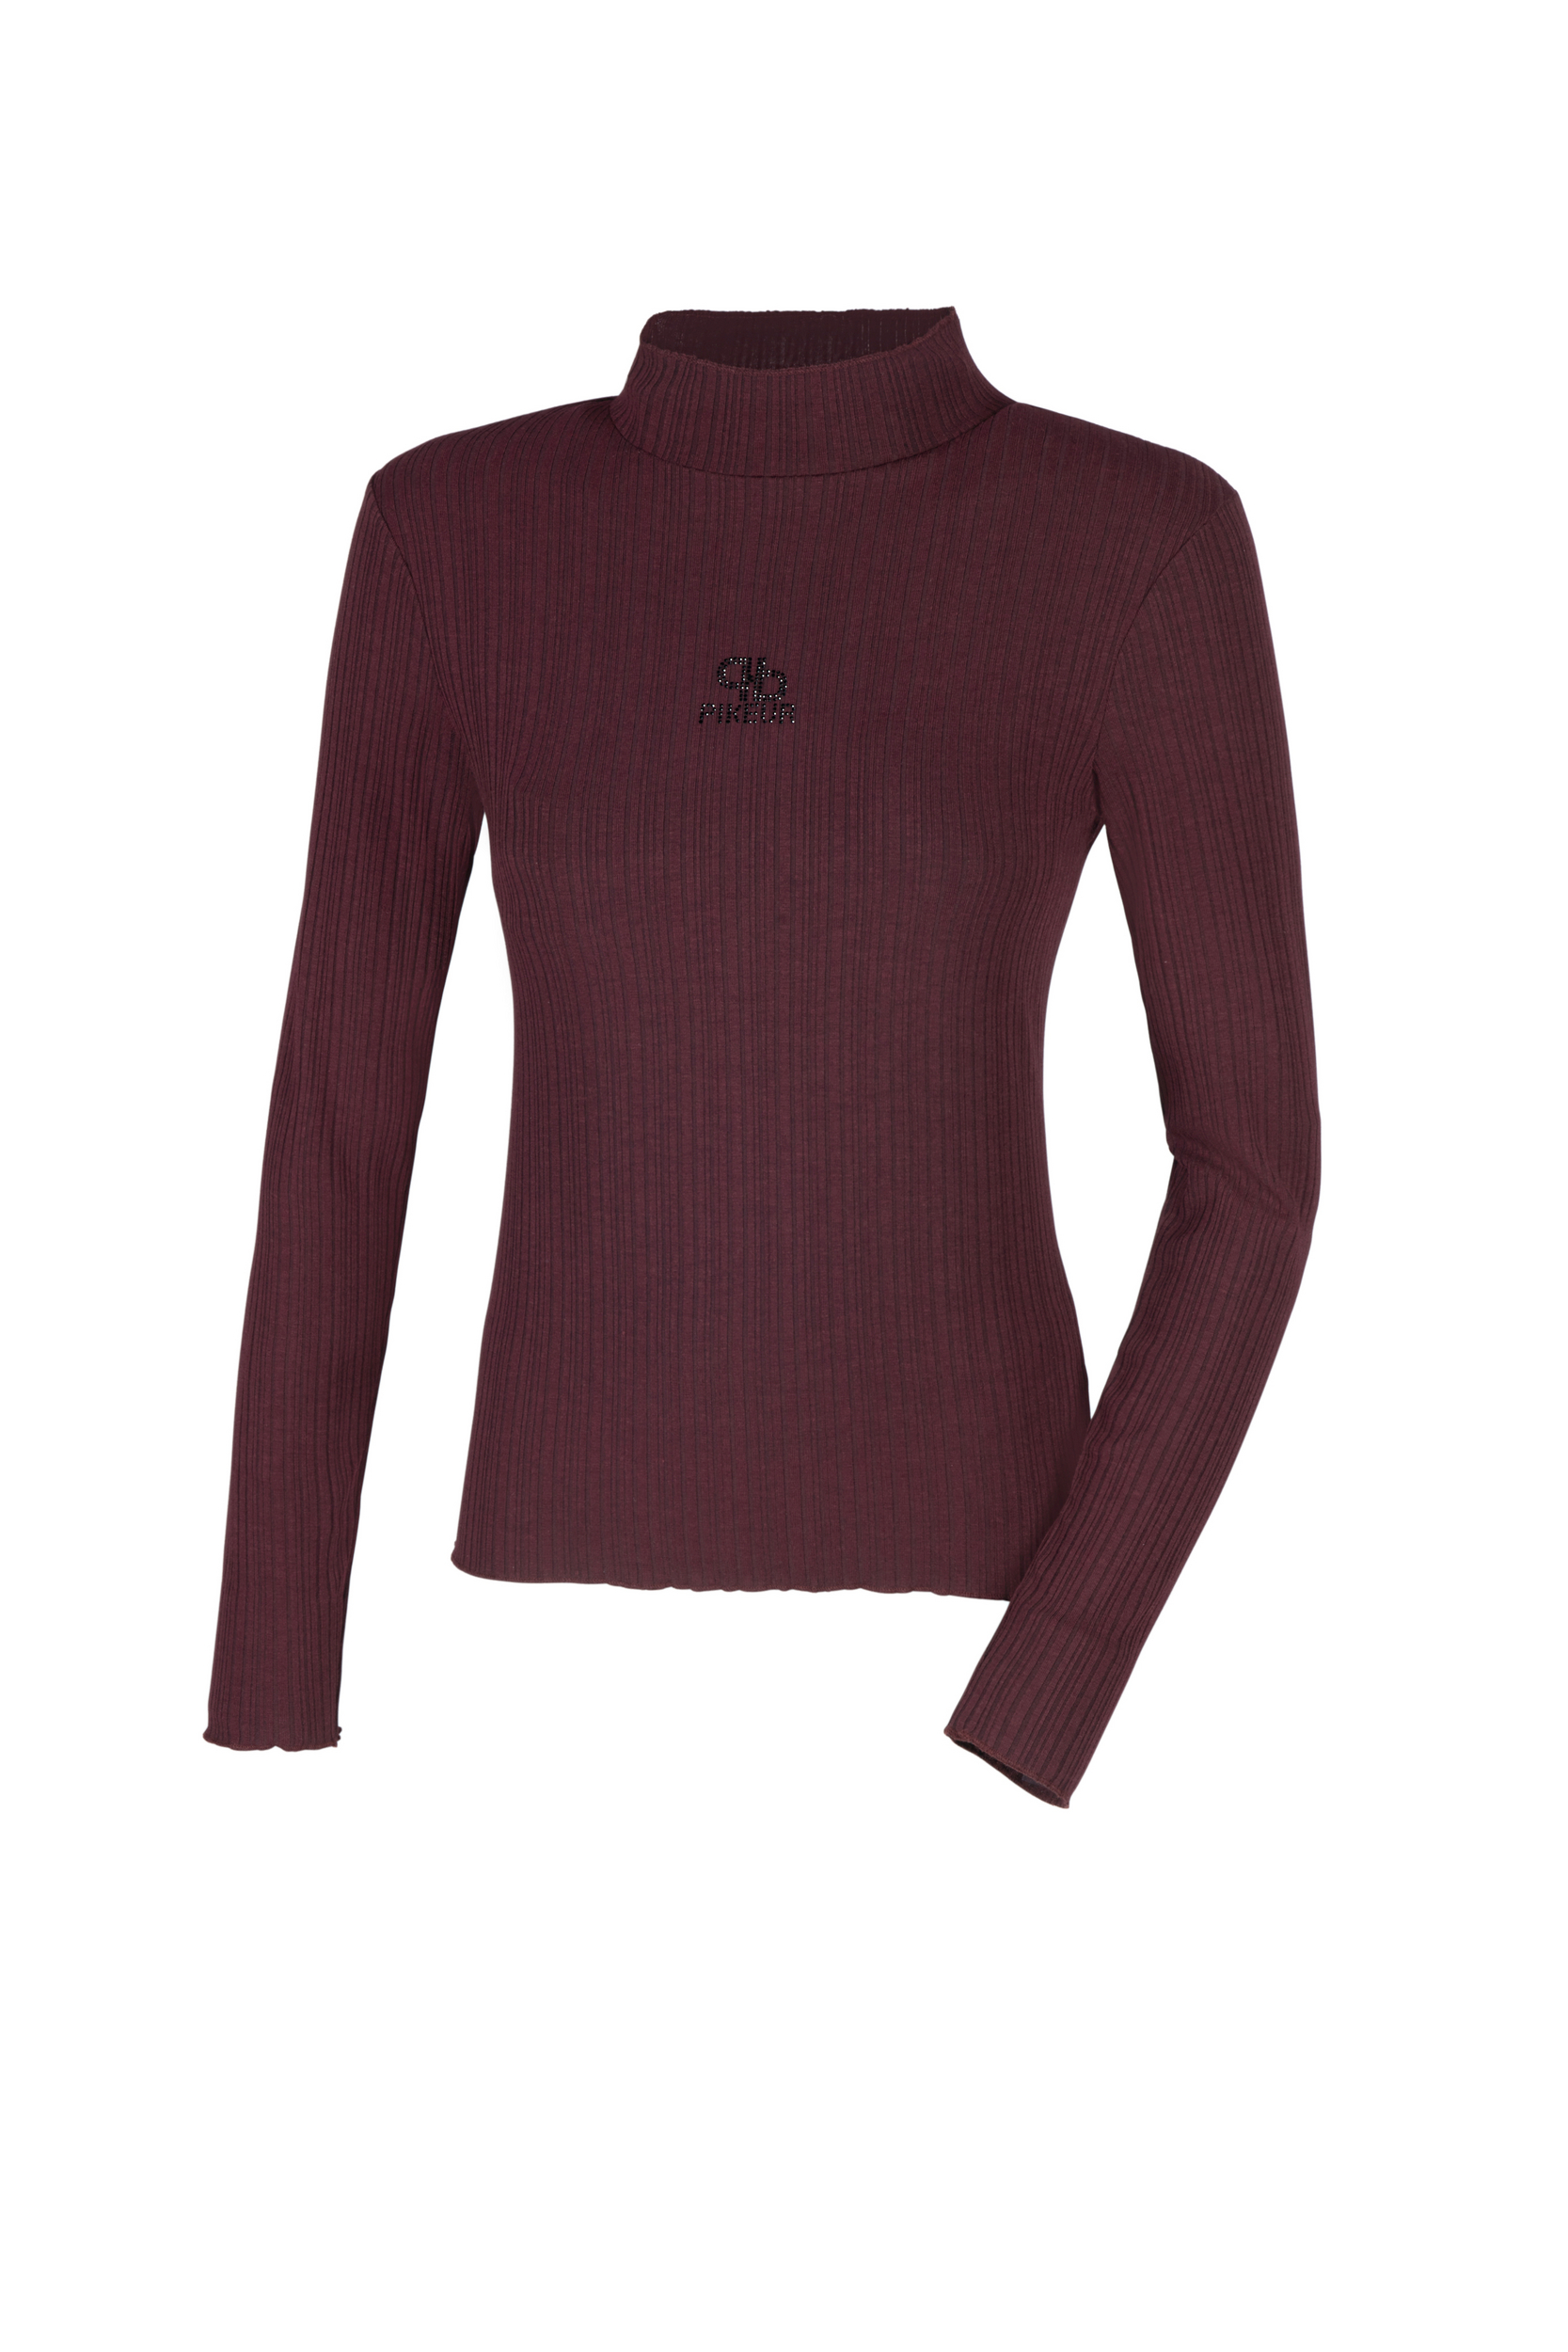 PIKEUR elegantes Damen Rip Shirt 4277 Selection 23 - mulberry - 40 - 2